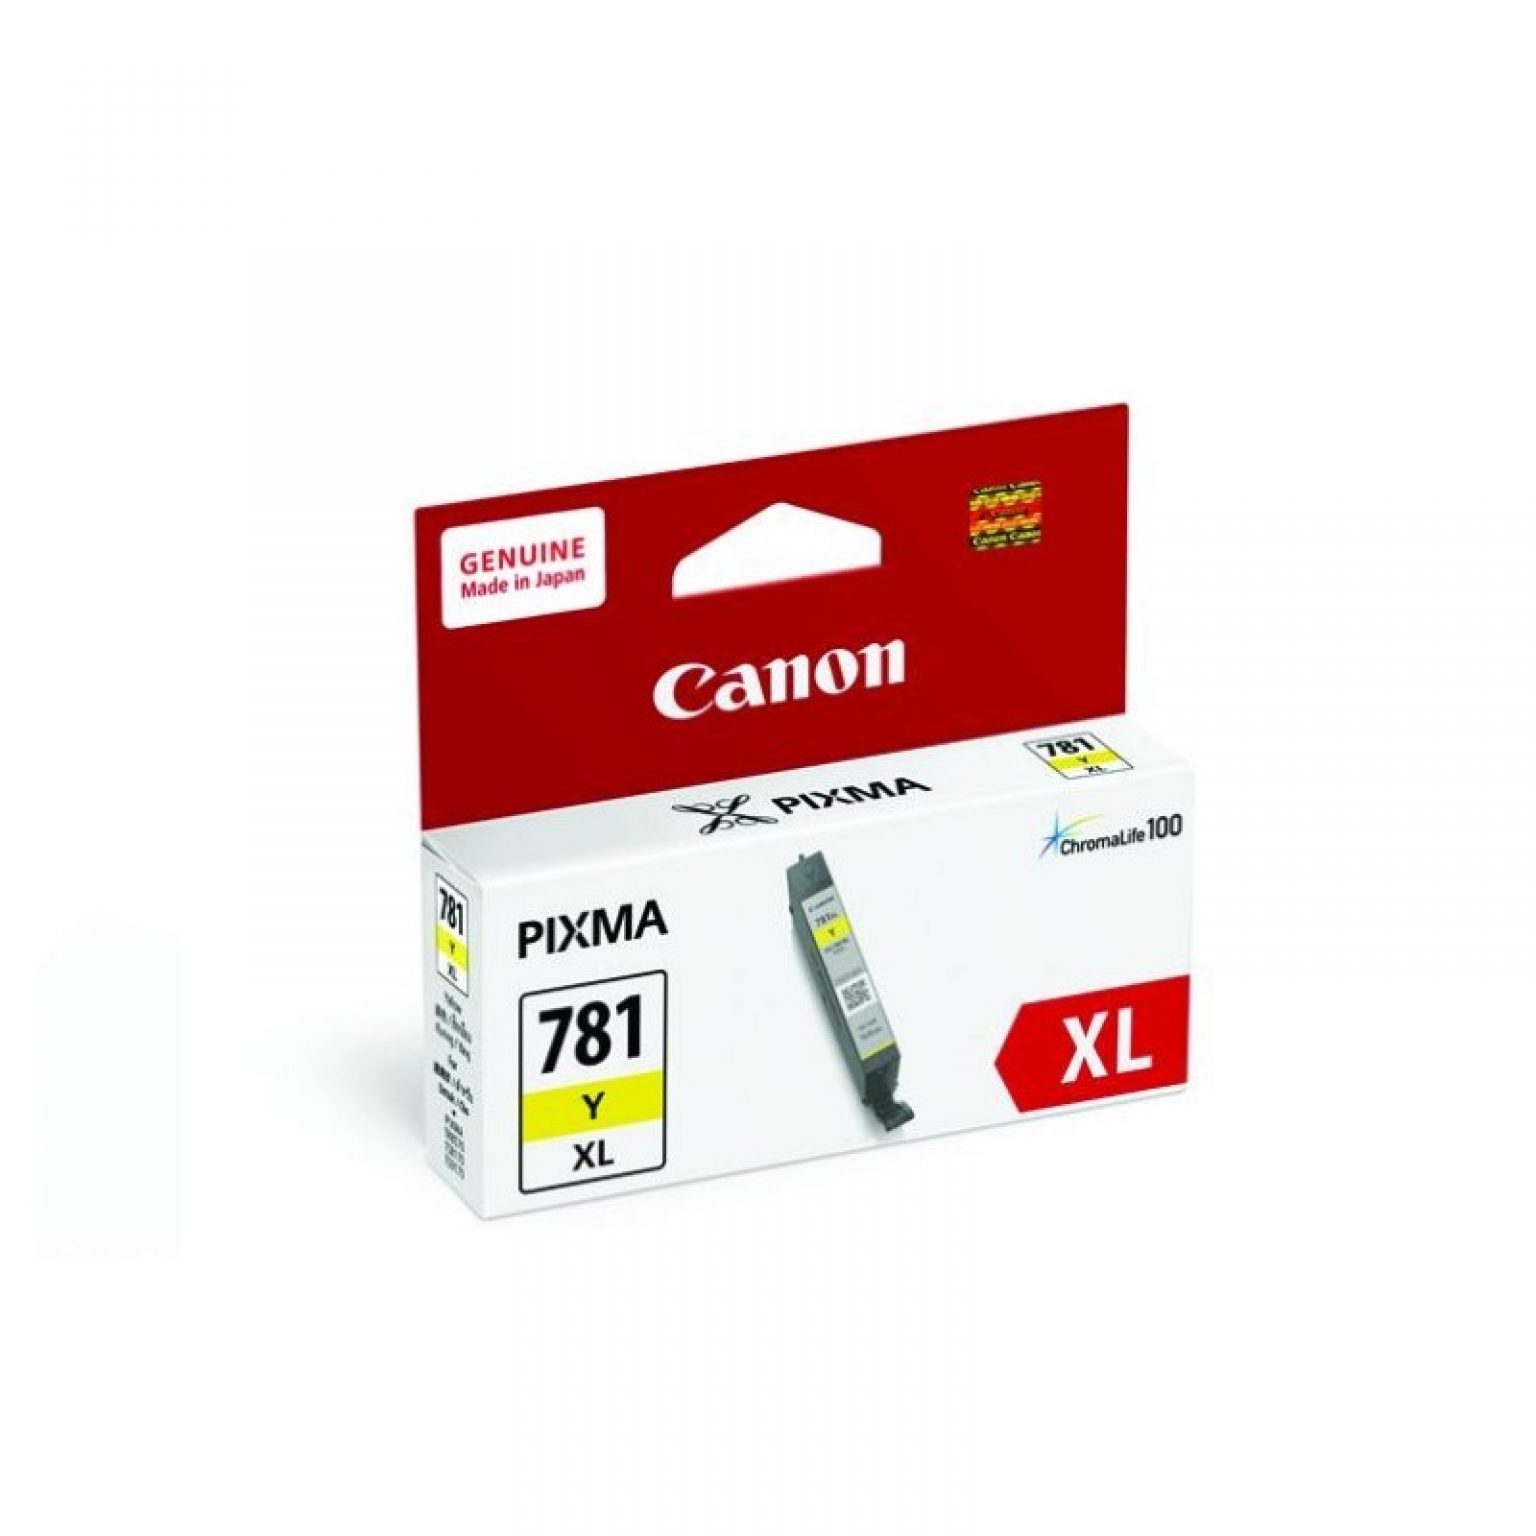 CANON - Ink Cartridge CLI-781 Yellow XL [CLI-781 Y XL]